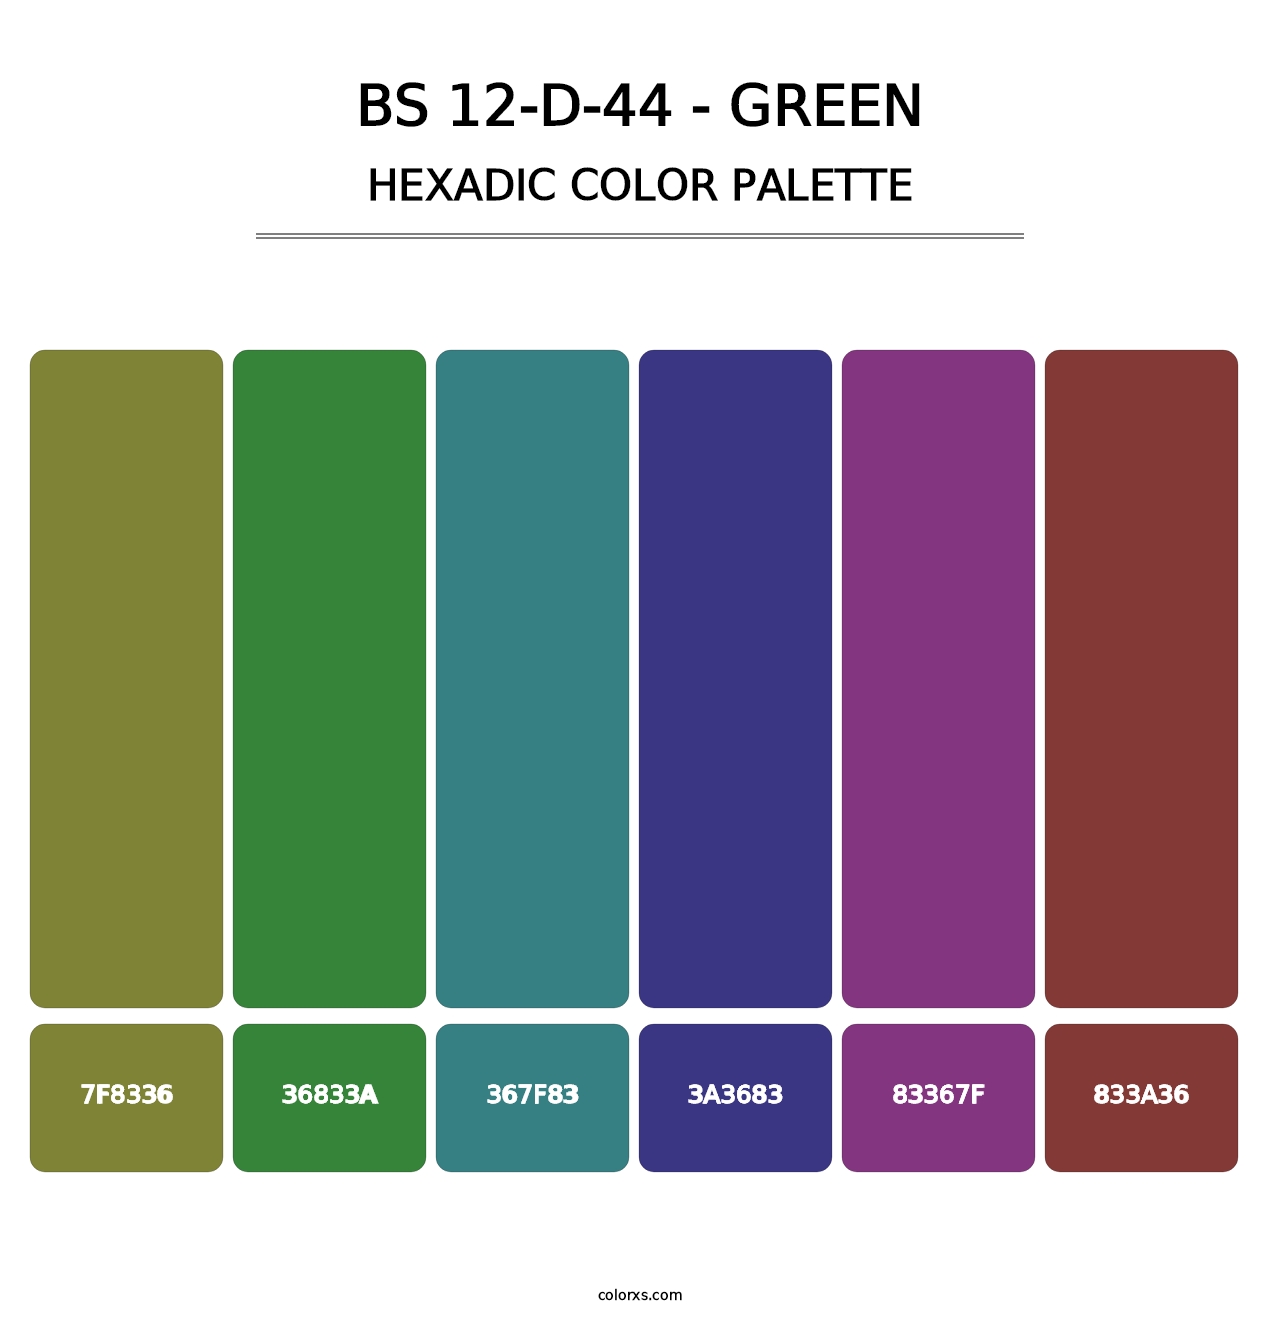 BS 12-D-44 - Green - Hexadic Color Palette